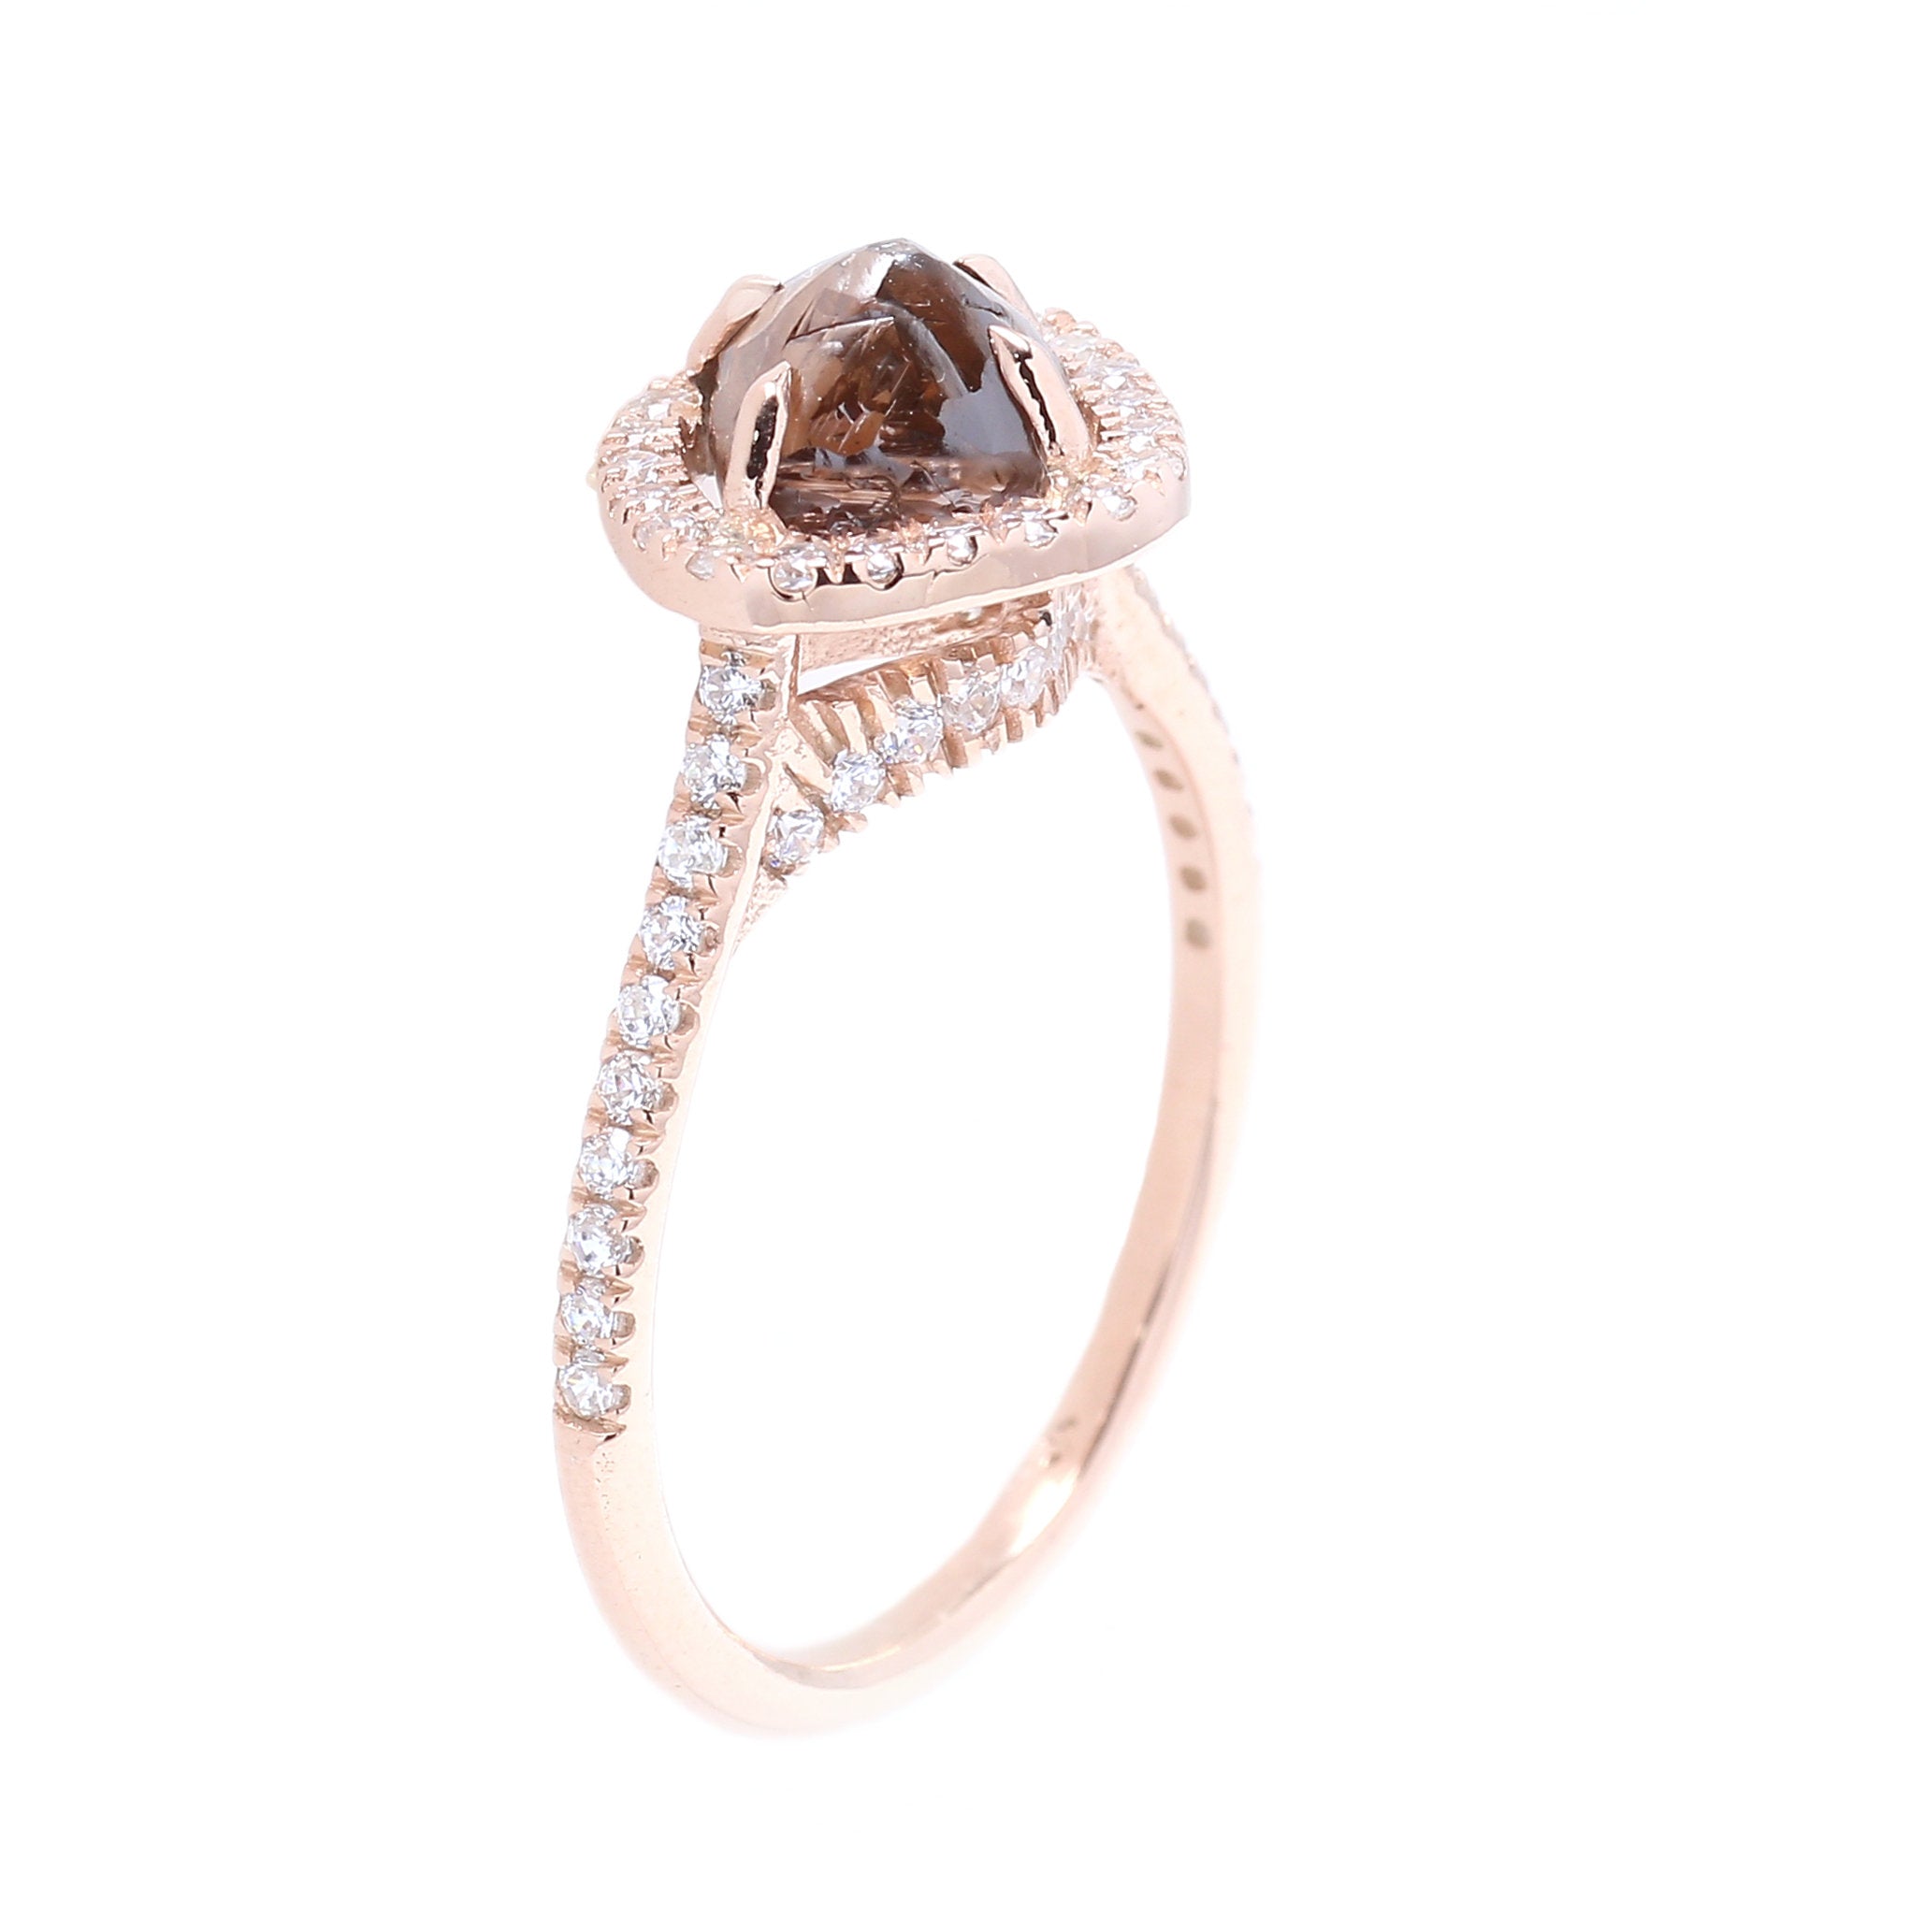 2.09 Ct Brown Rough Diamond 14K Solid Rose White Yellow Gold Ring Engagement Wedding Gift Ring KD835